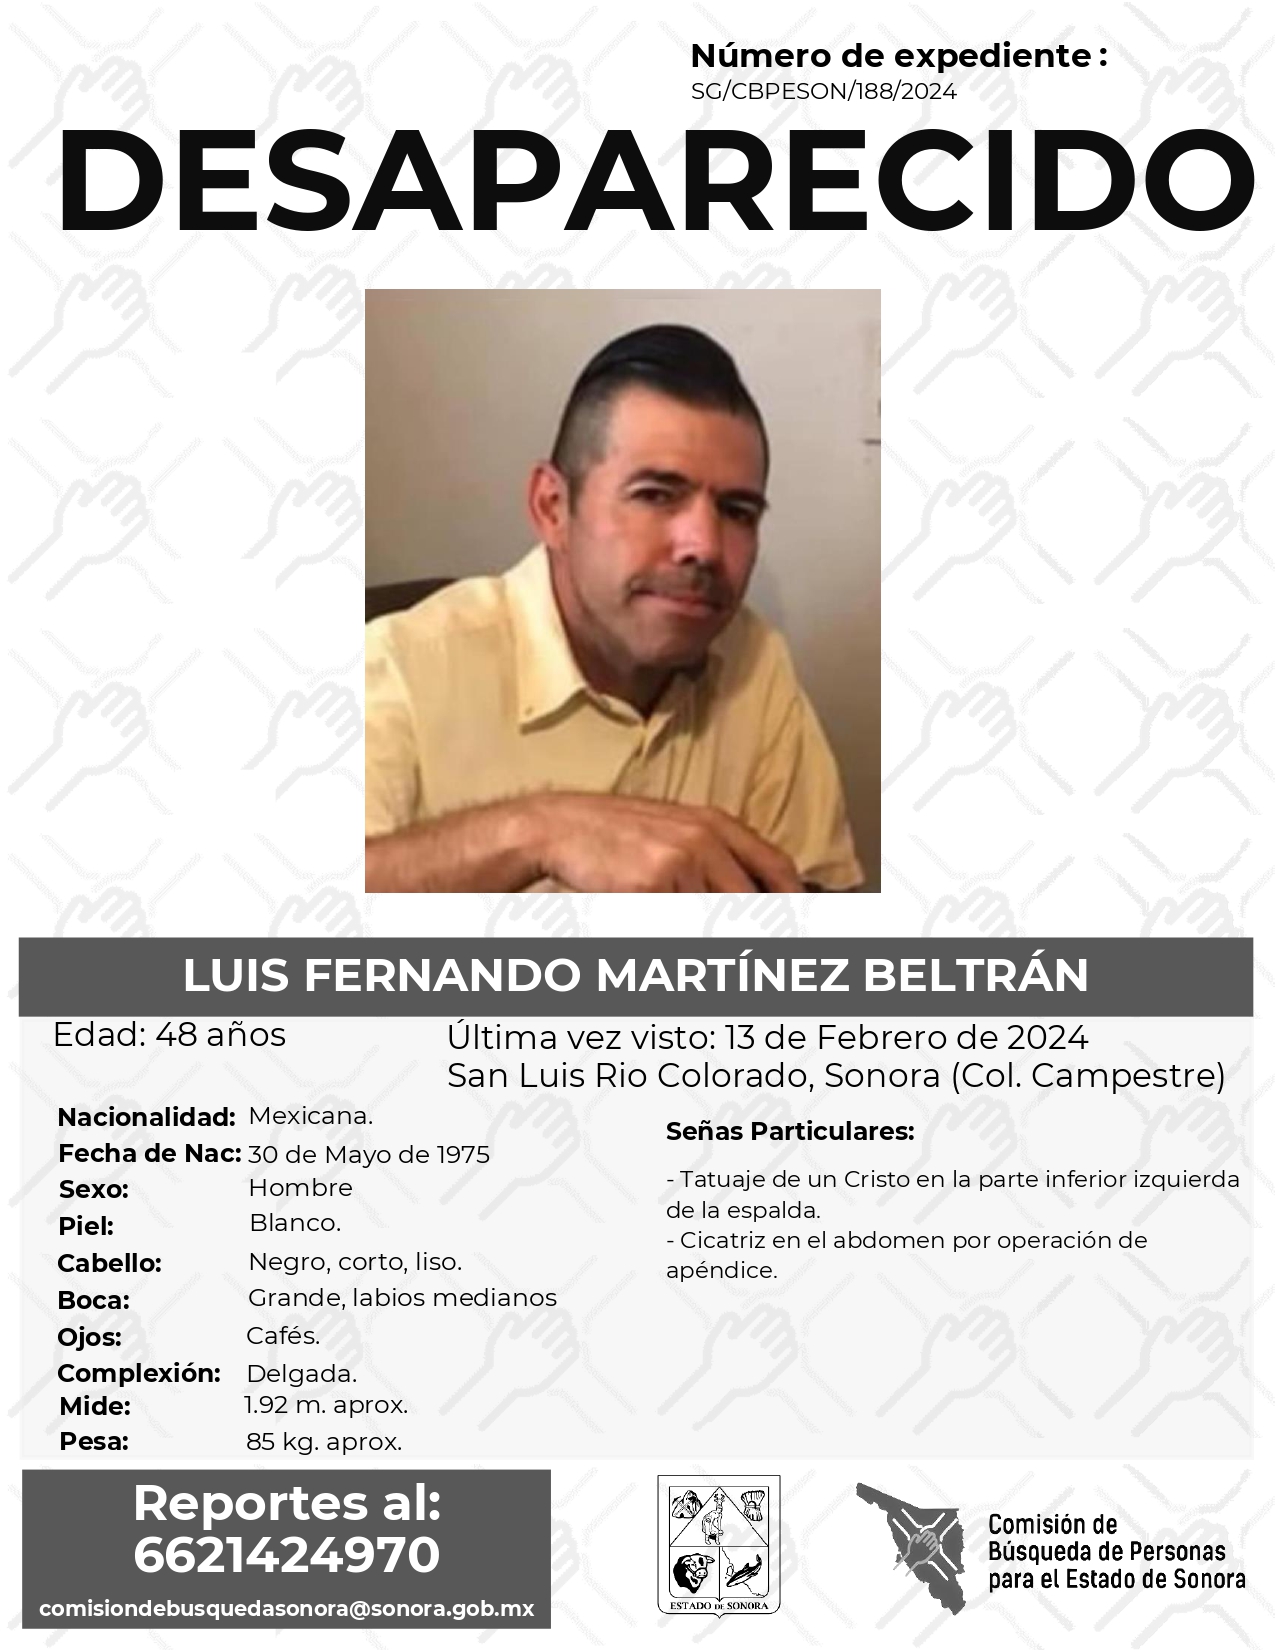 LUIS FERNANDO MARTÍNEZ BELTRÁN - DESAPARECIDO